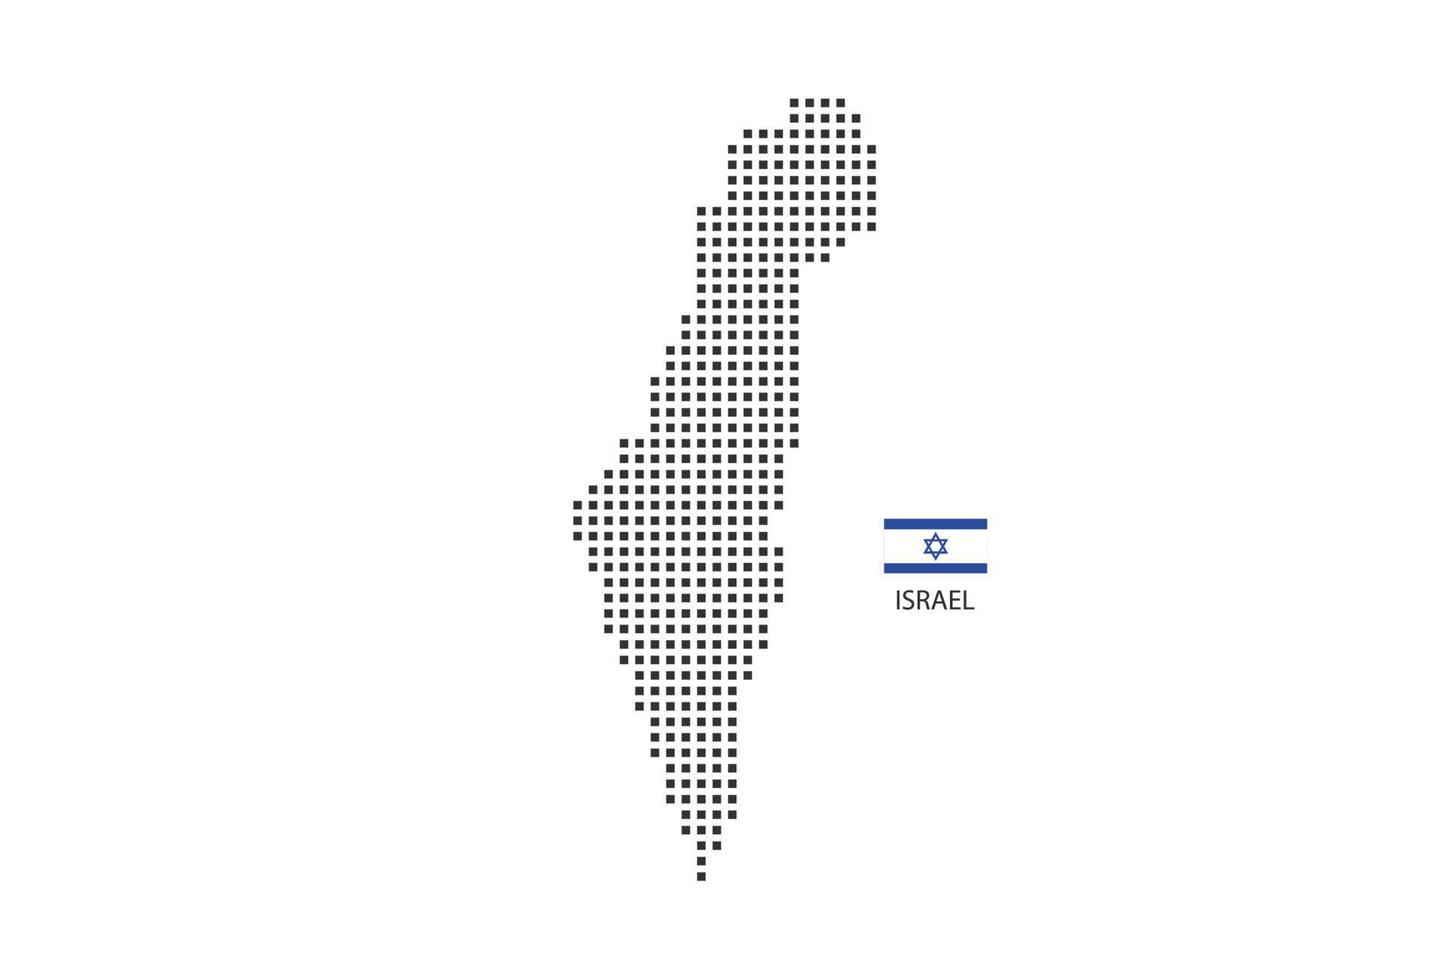 mapa pontilhado de pixel quadrado vetorial de israel isolado no fundo branco com bandeira de israel. vetor